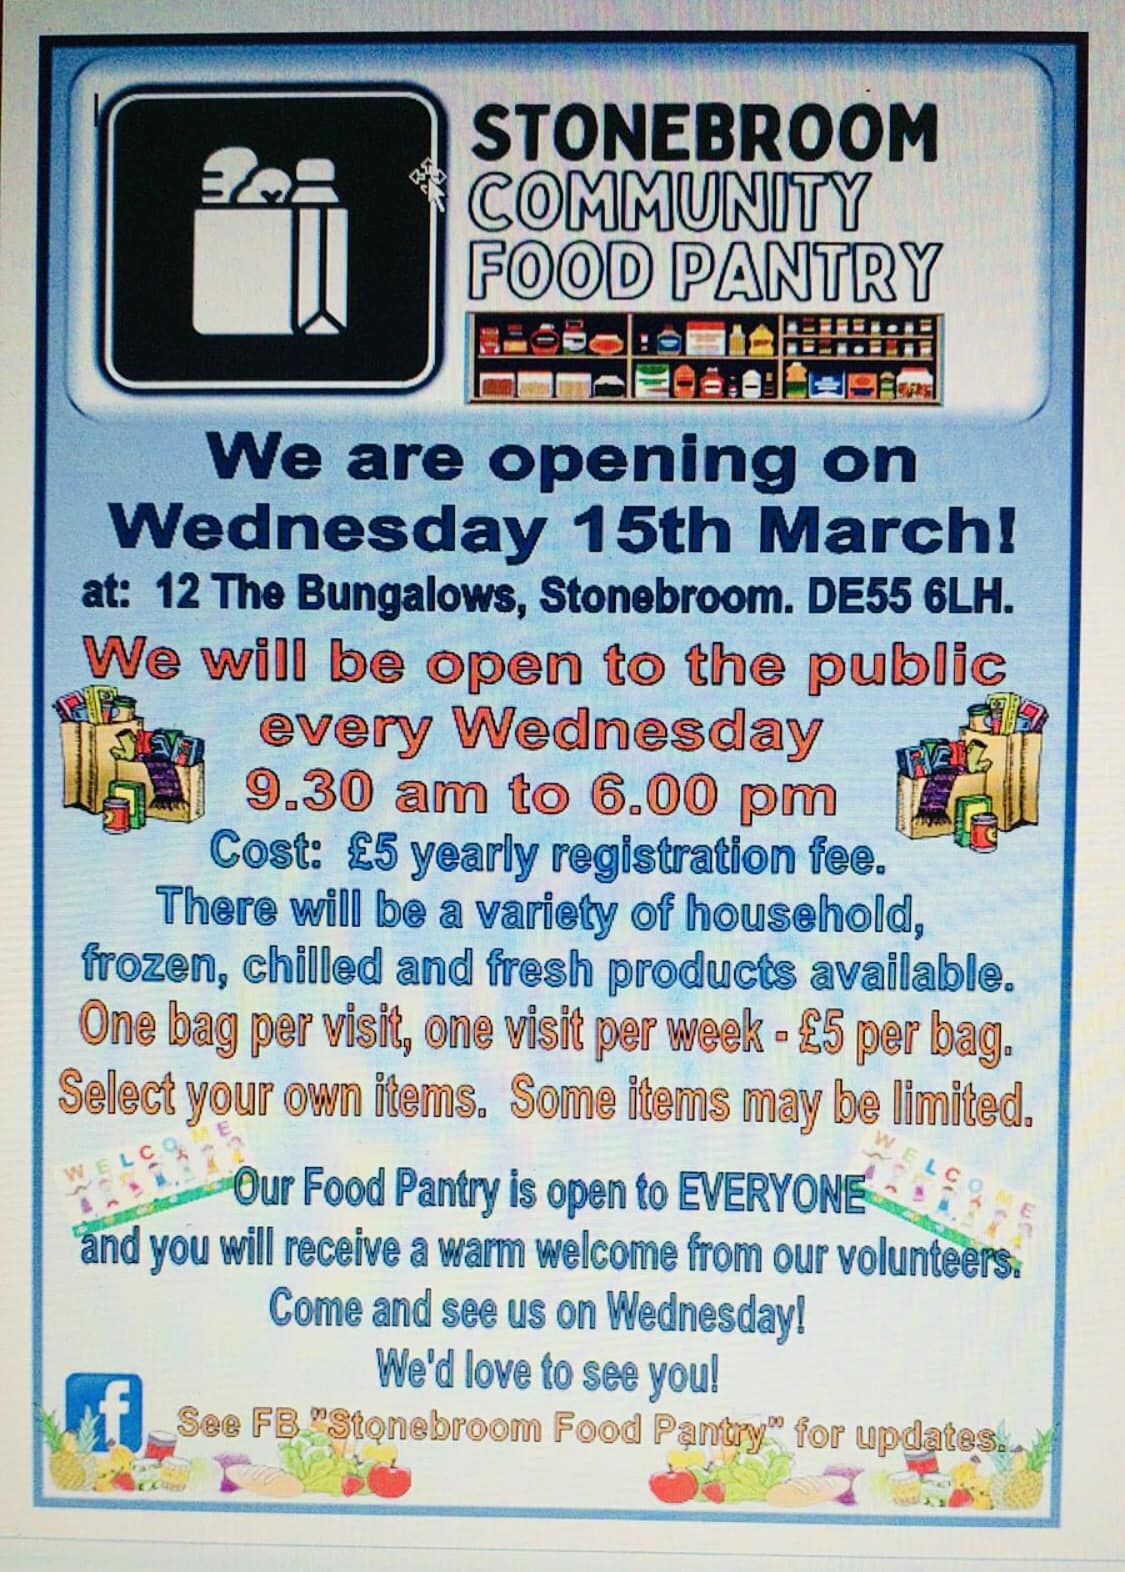 Stonebroom Community Food Pantry